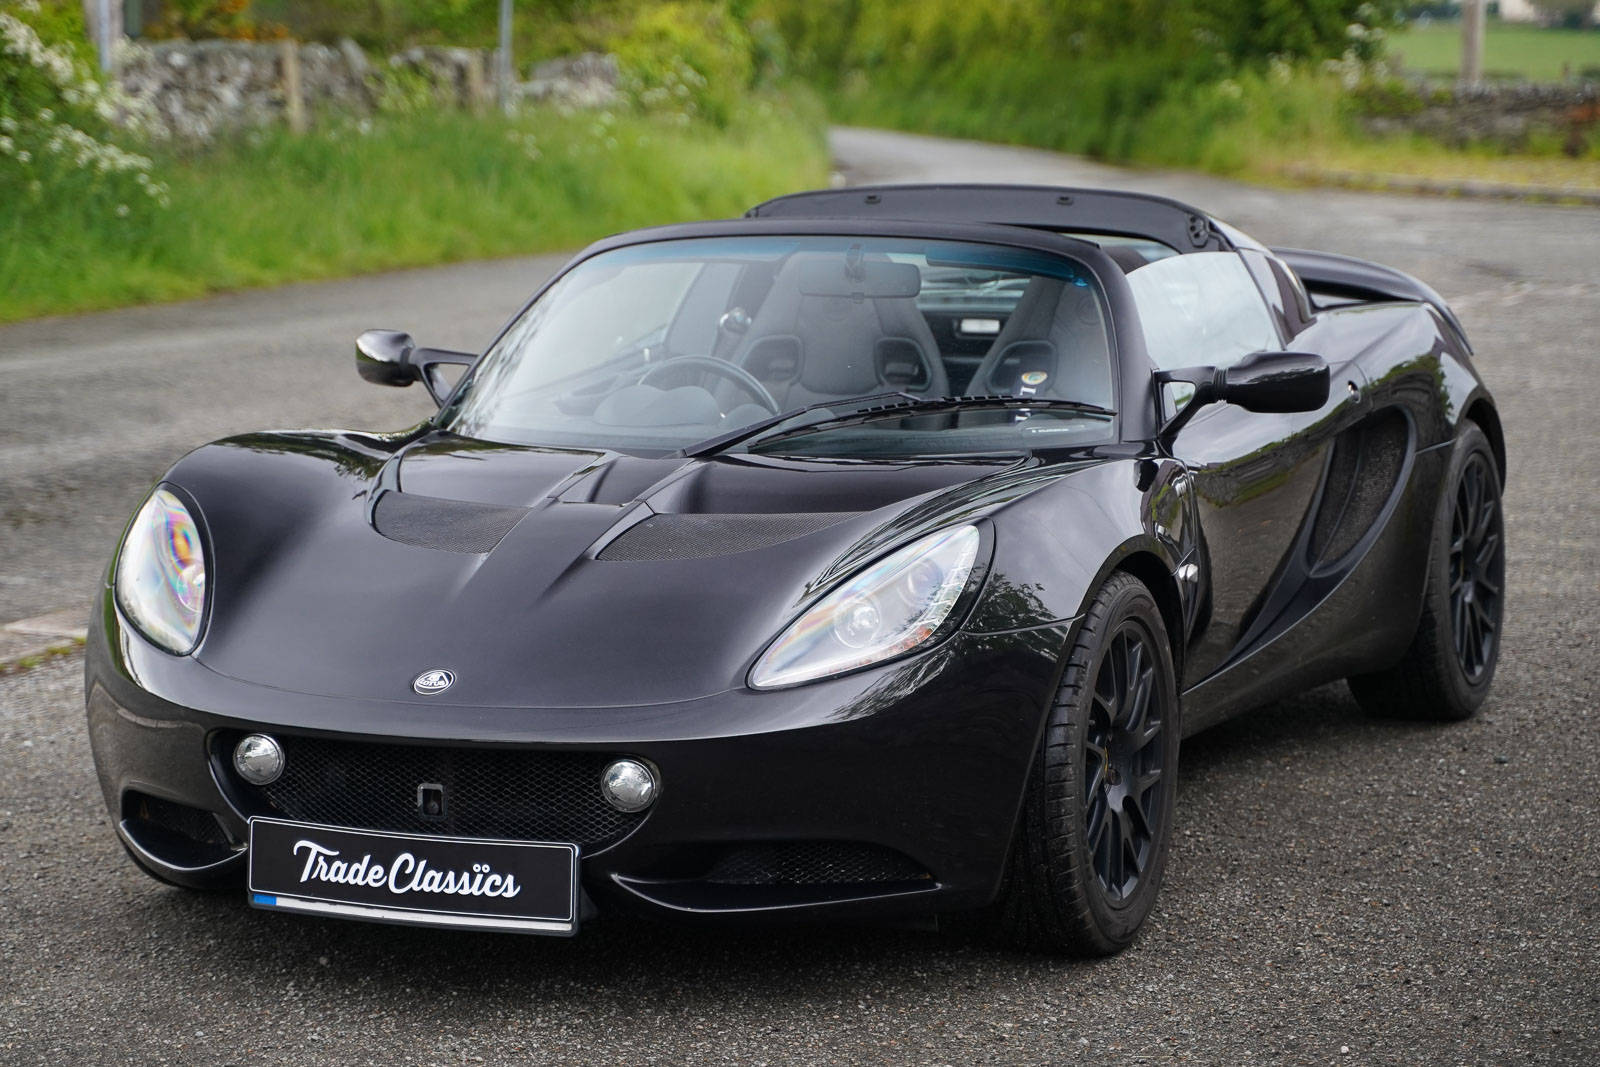 2013 Shiny Black Lotus Elise Convertible Car Wallpaper